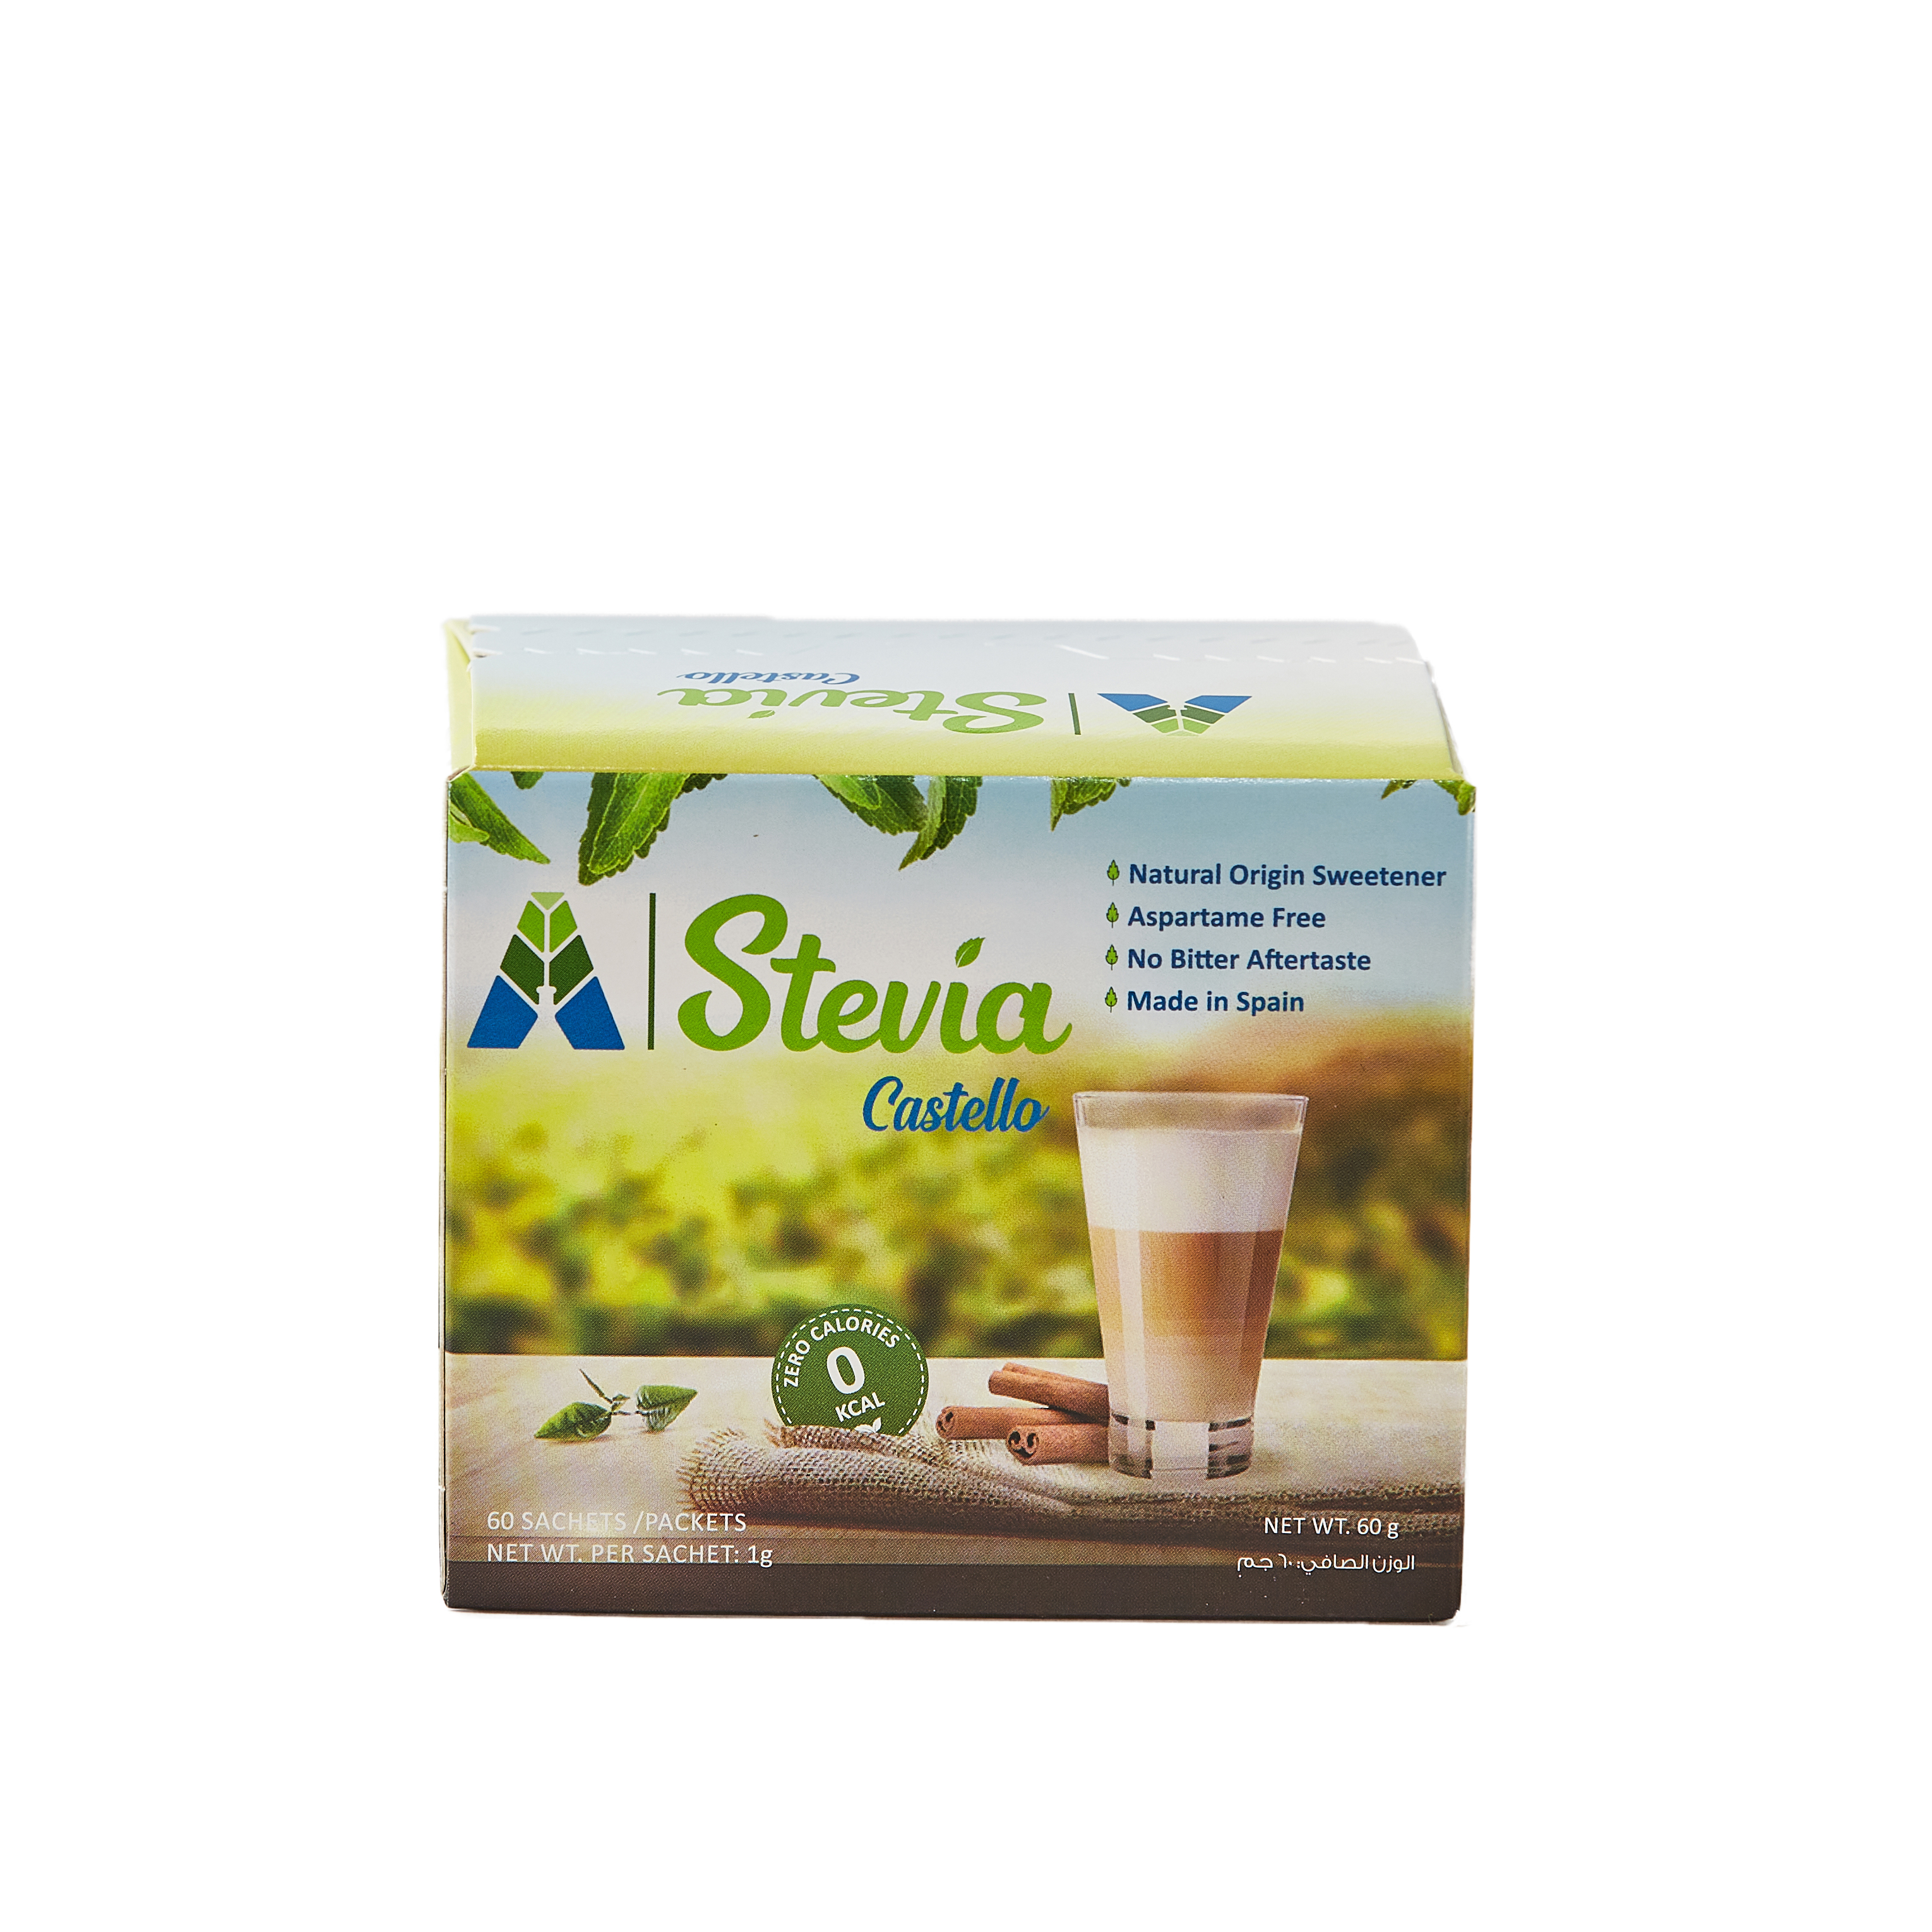 Stevia Castello box of 60 sachets zero calorie sweetener